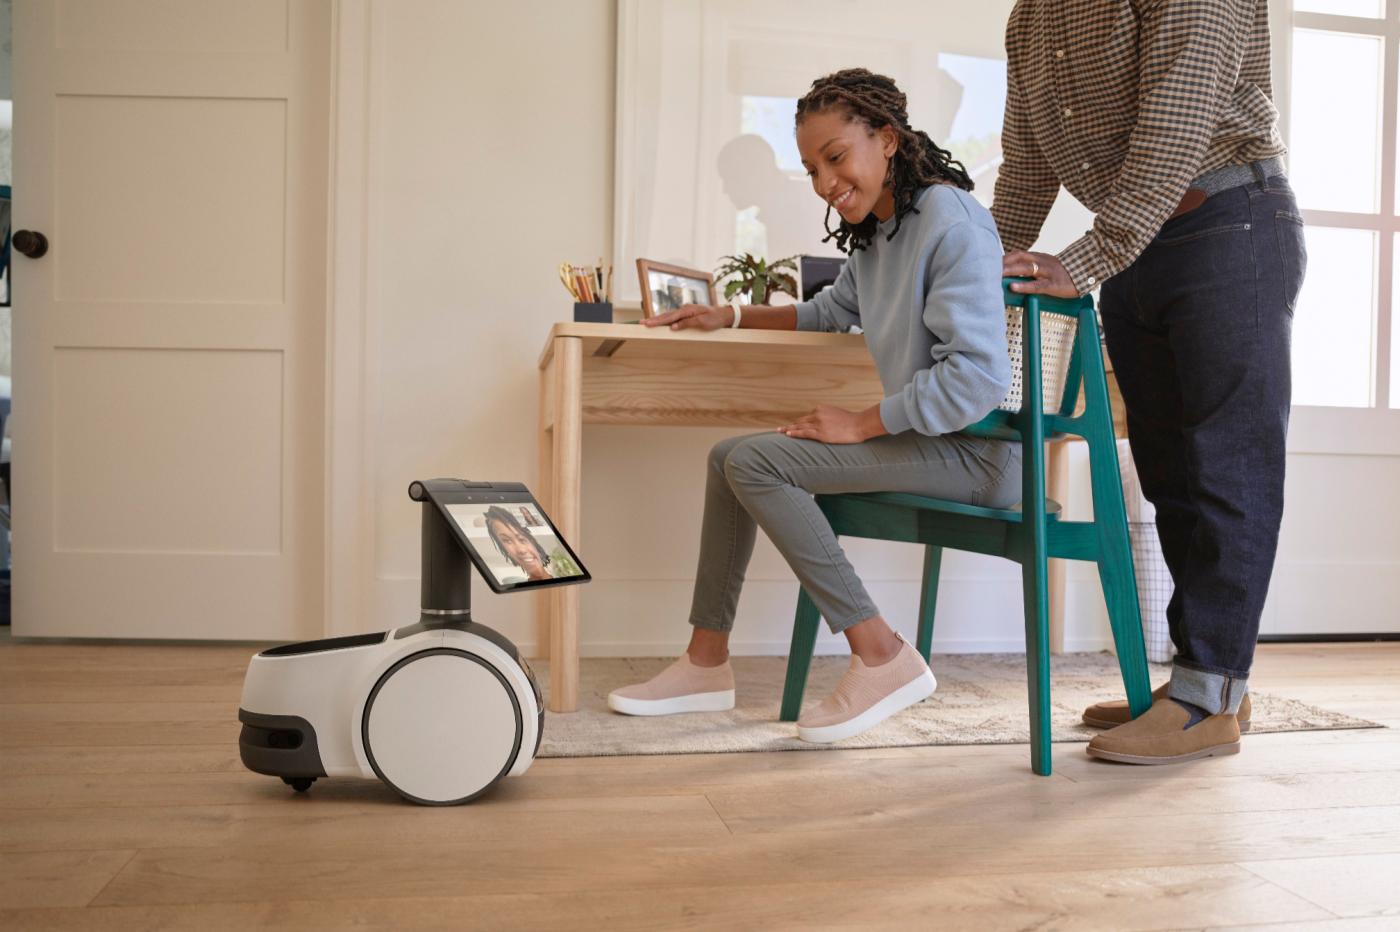 astro robot Amazon avec utilisateur